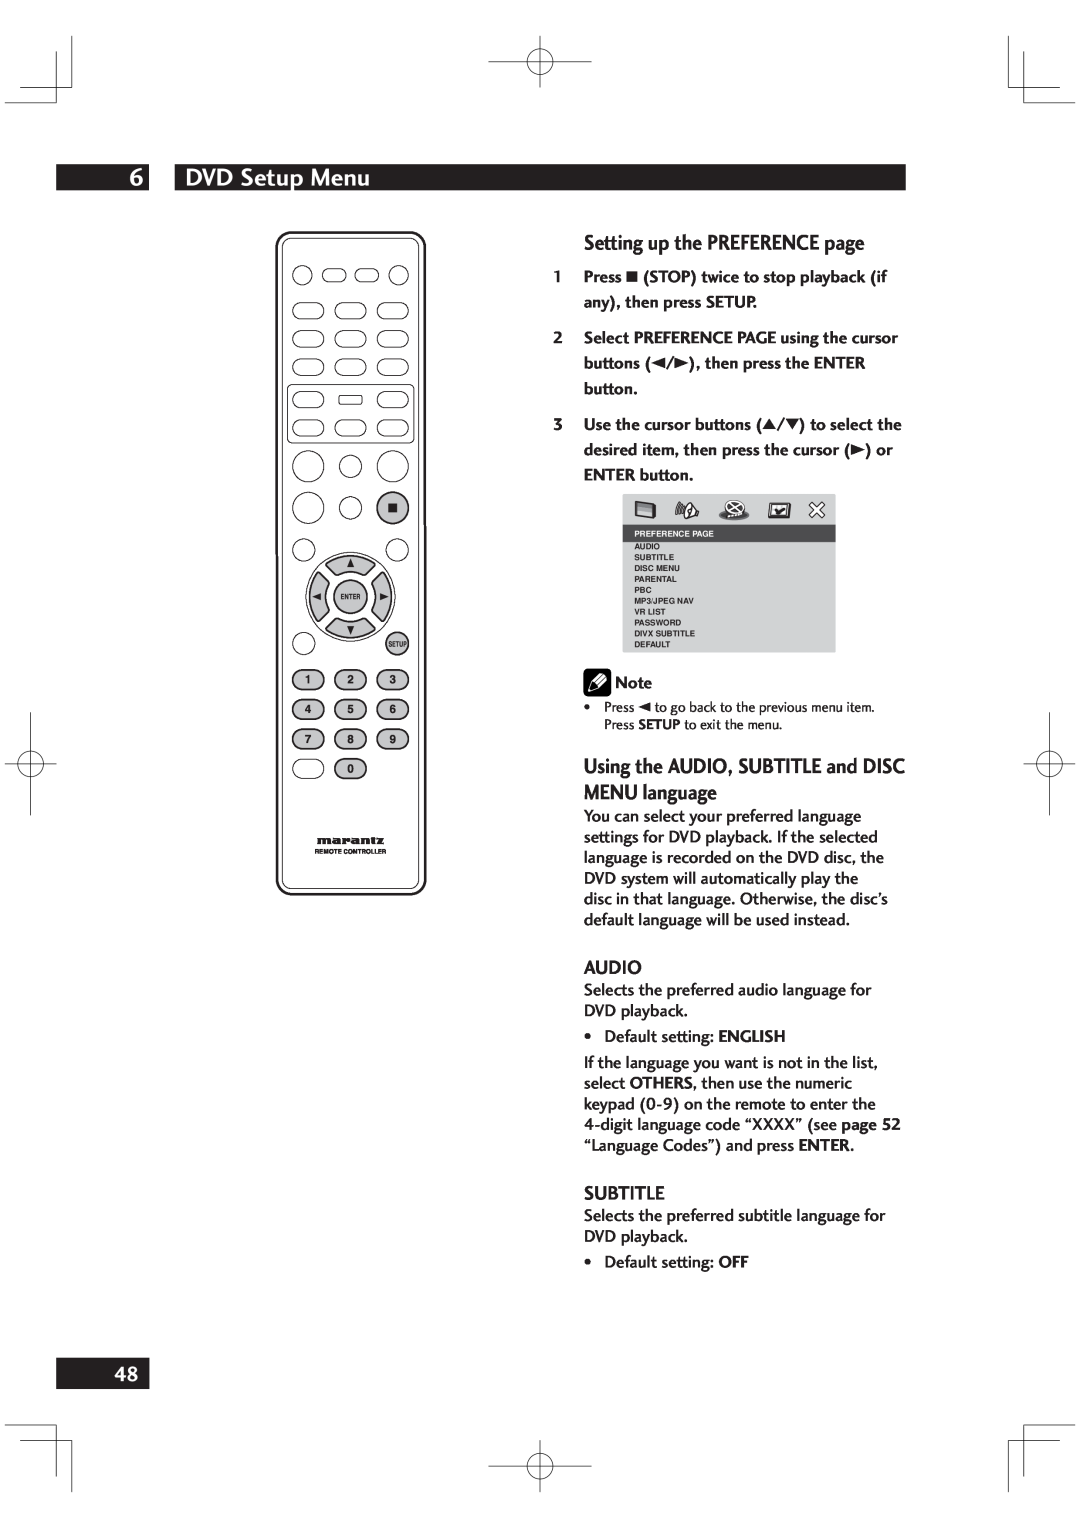 Marantz VC6001 manual Setting up the PREFERENCE page, Using the AUDIO, SUBTITLE and DISC MENU language, Audio, Subtitle 